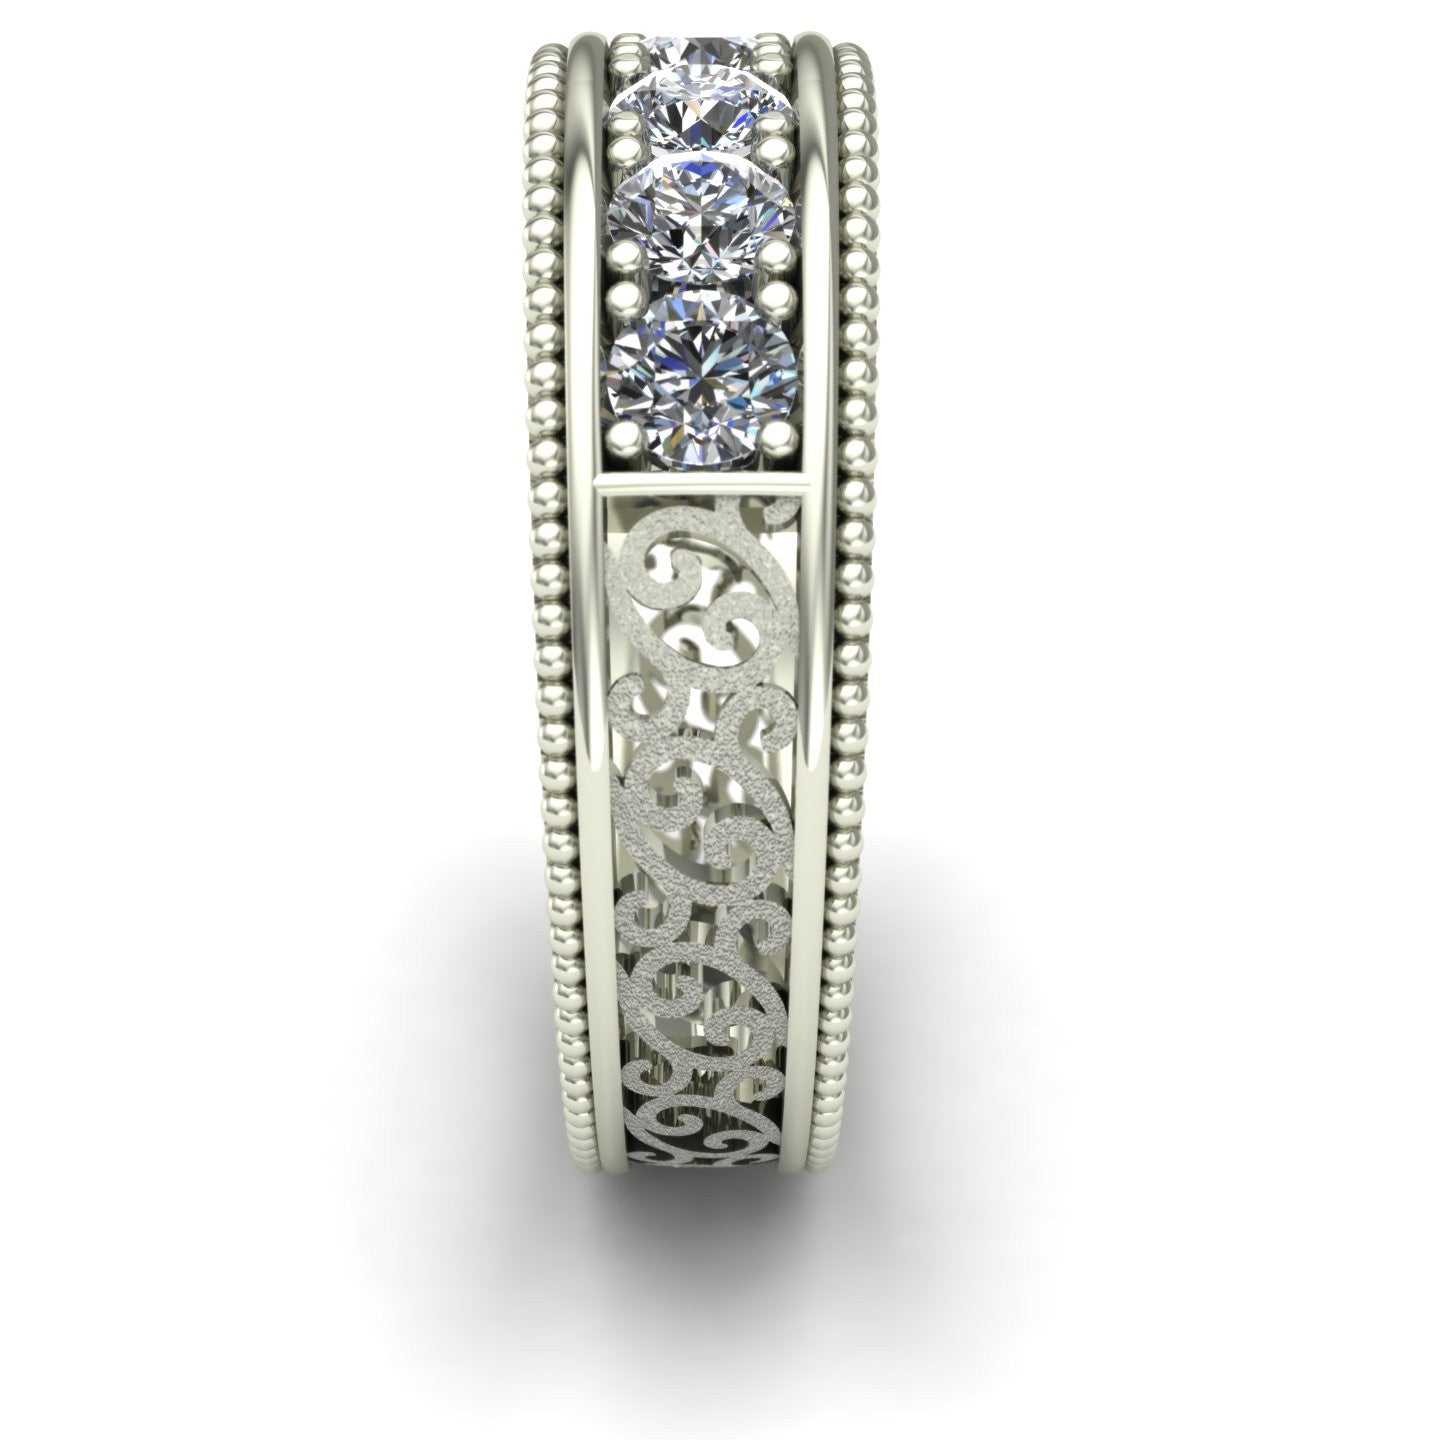 Sandblasted Scroll Filigree one carat Diamond Wedding Band in 14k White Gold - Charles Babb Designs - side view